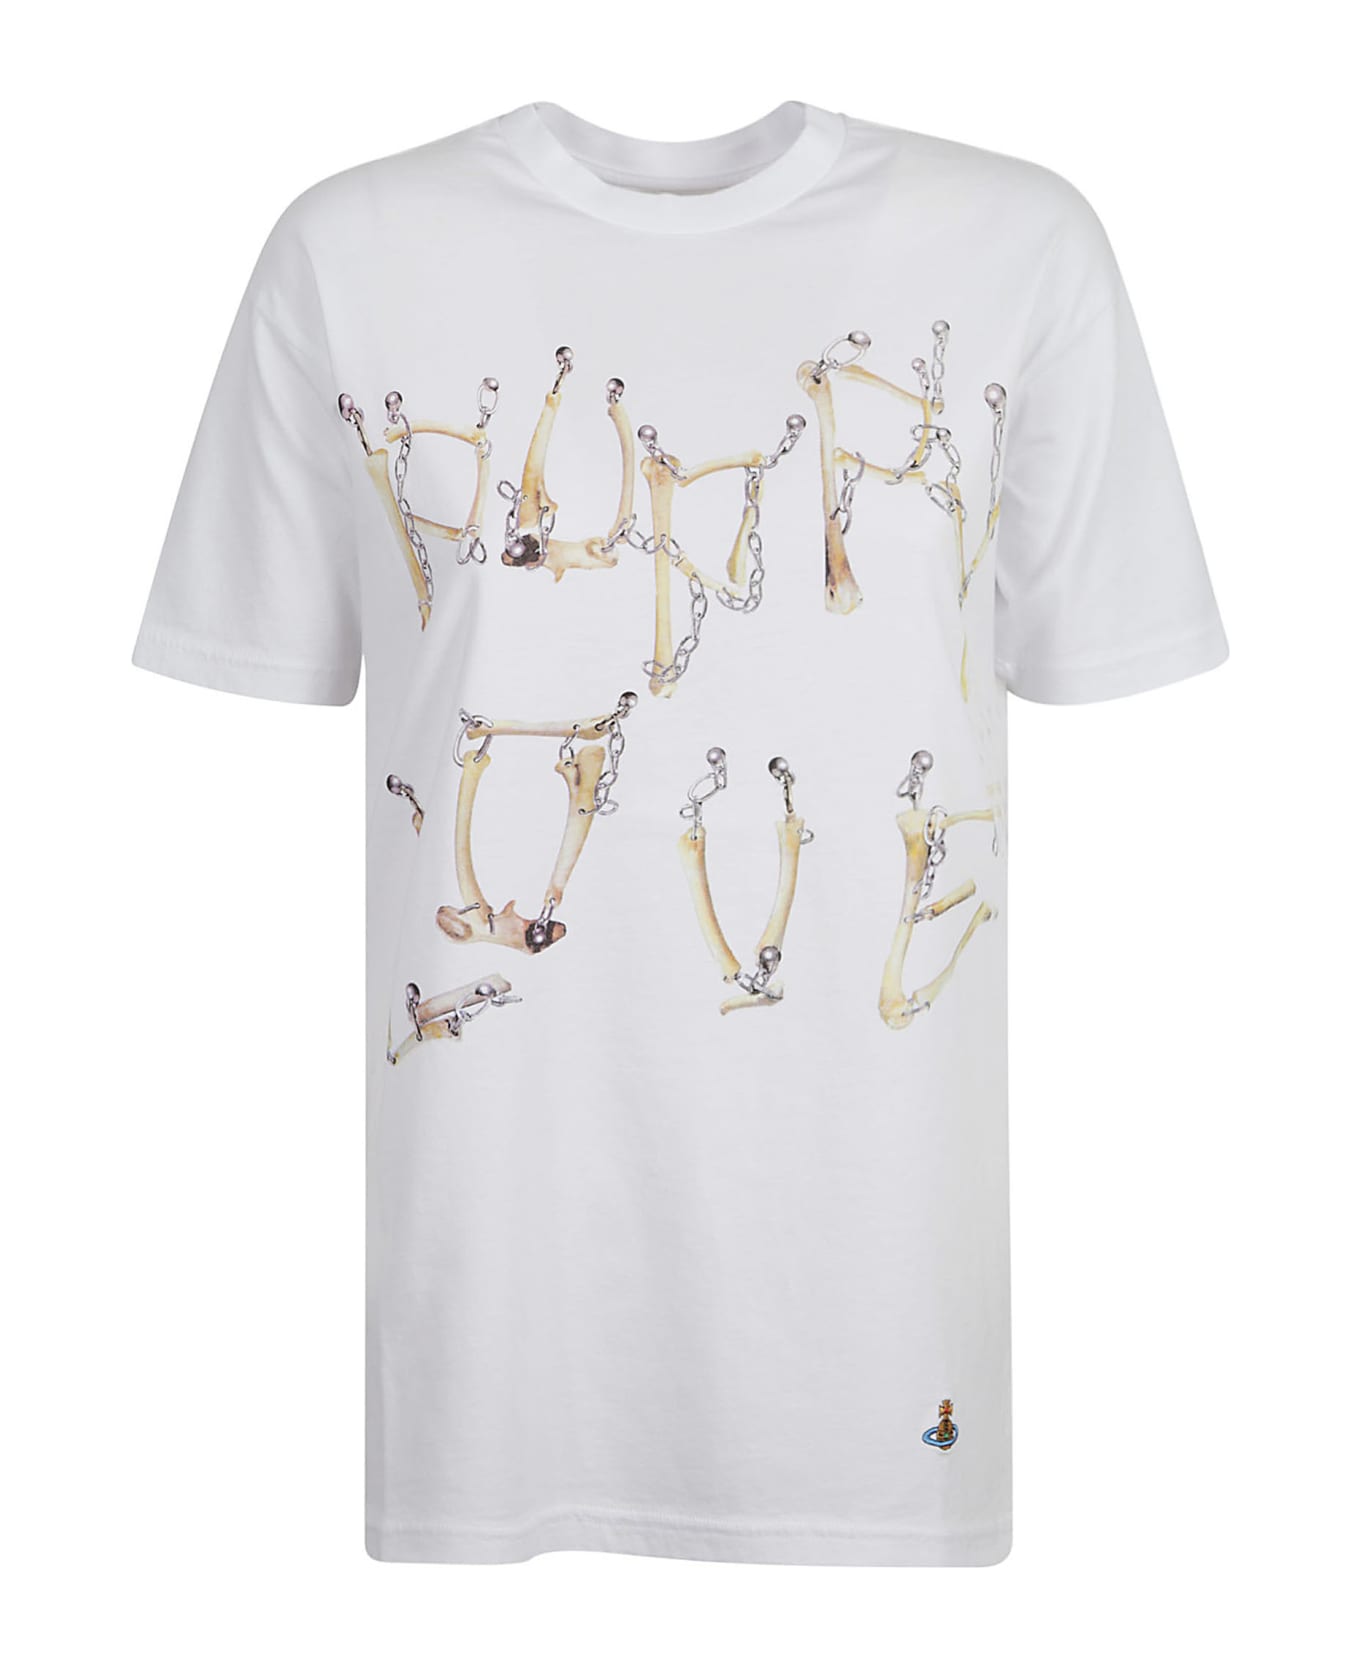 Vivienne Westwood Bones 'n Chain Classic T-shirt - White